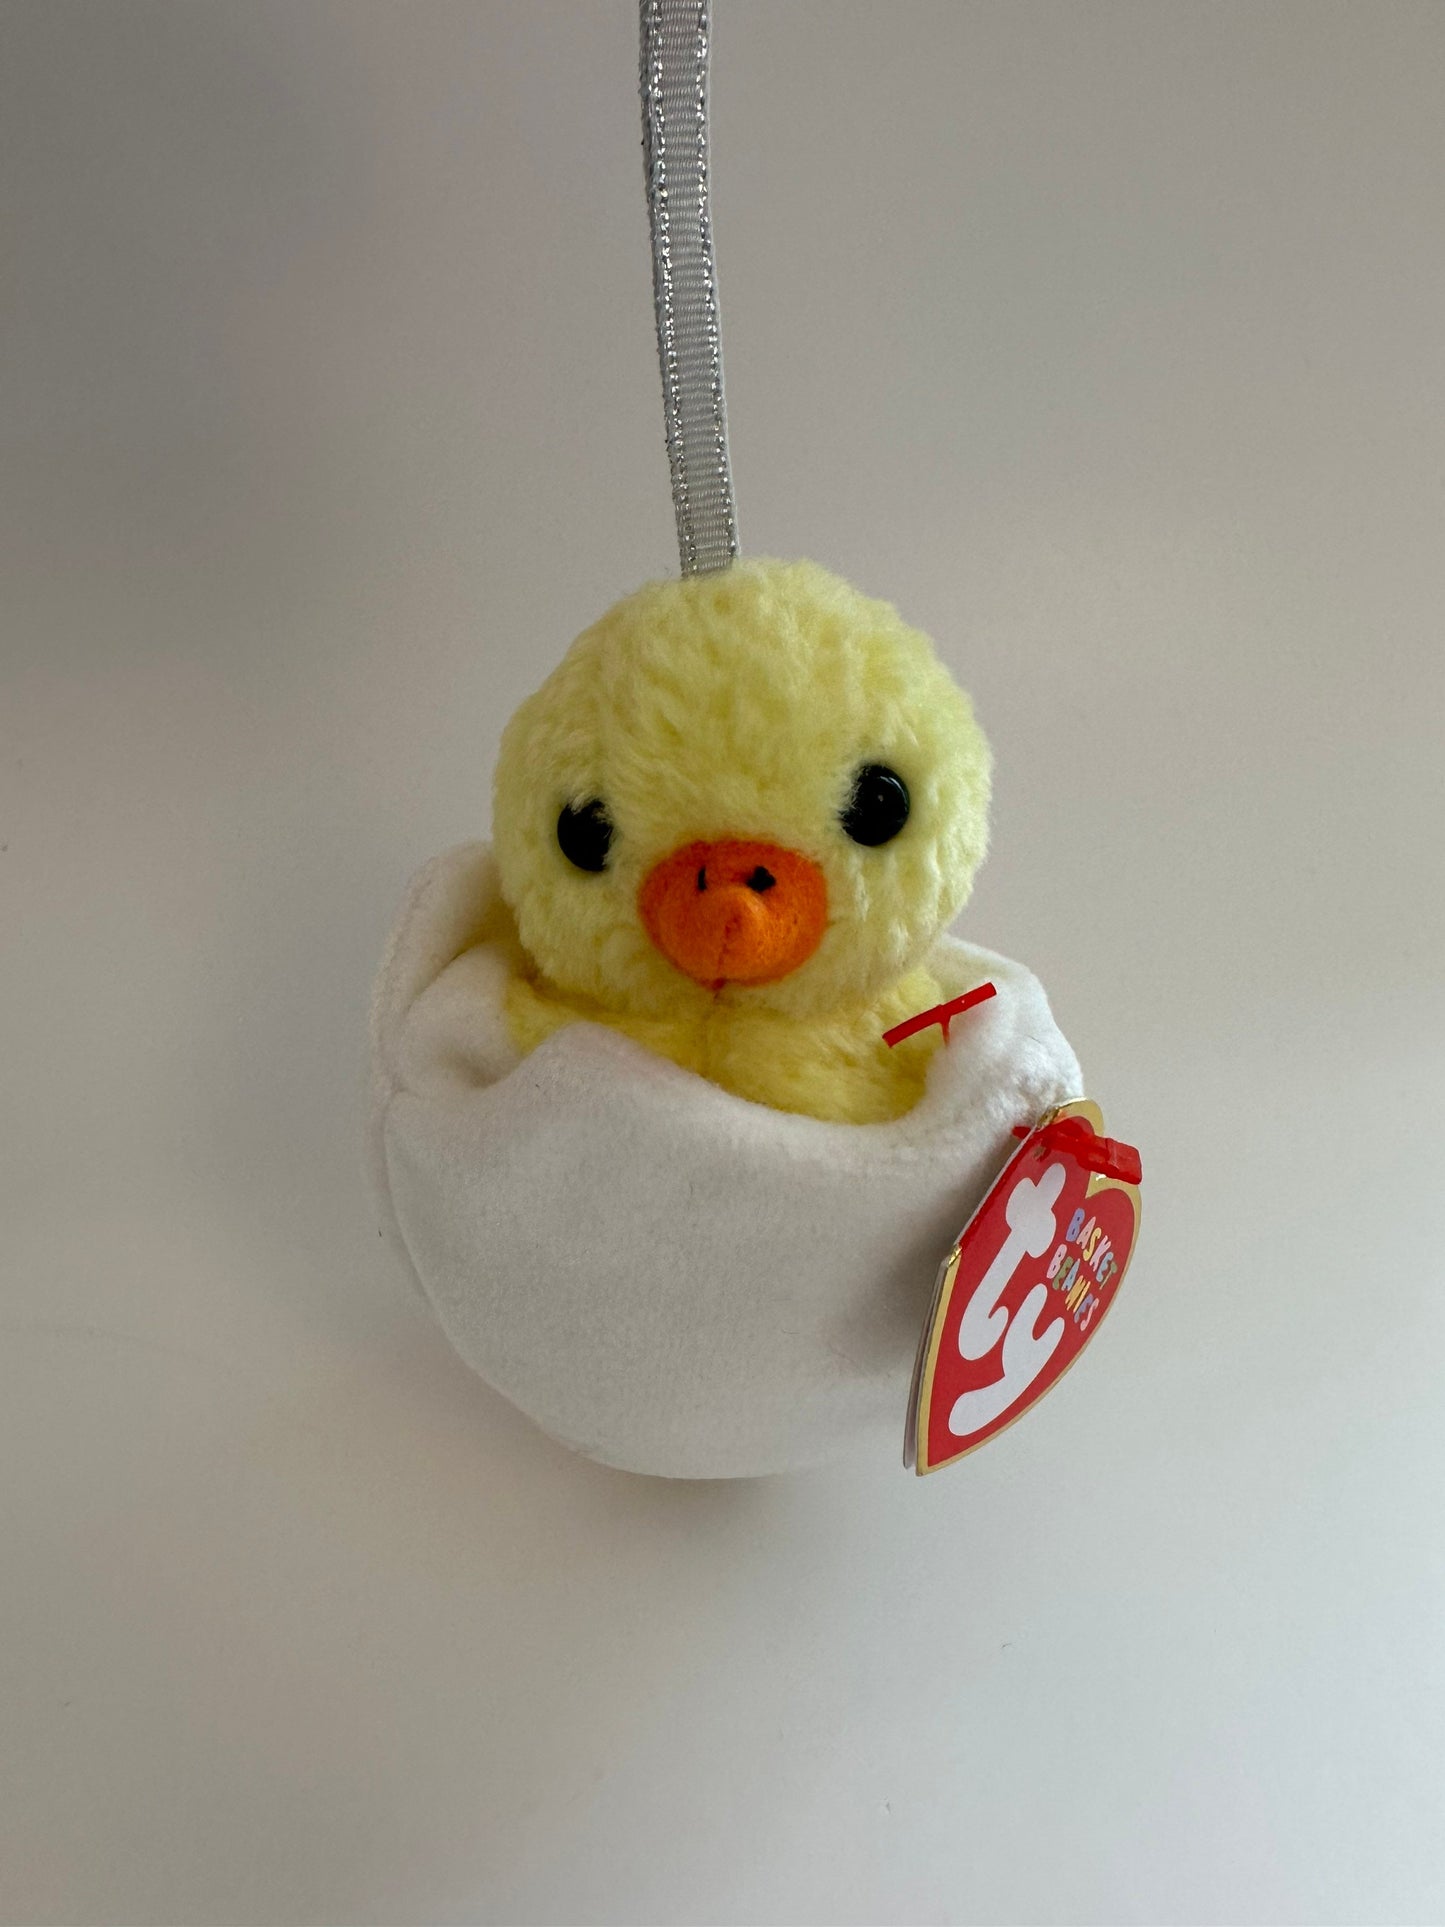 Ty Basket Beanie “Eggbert” the Hatching Chick! (4 inch)